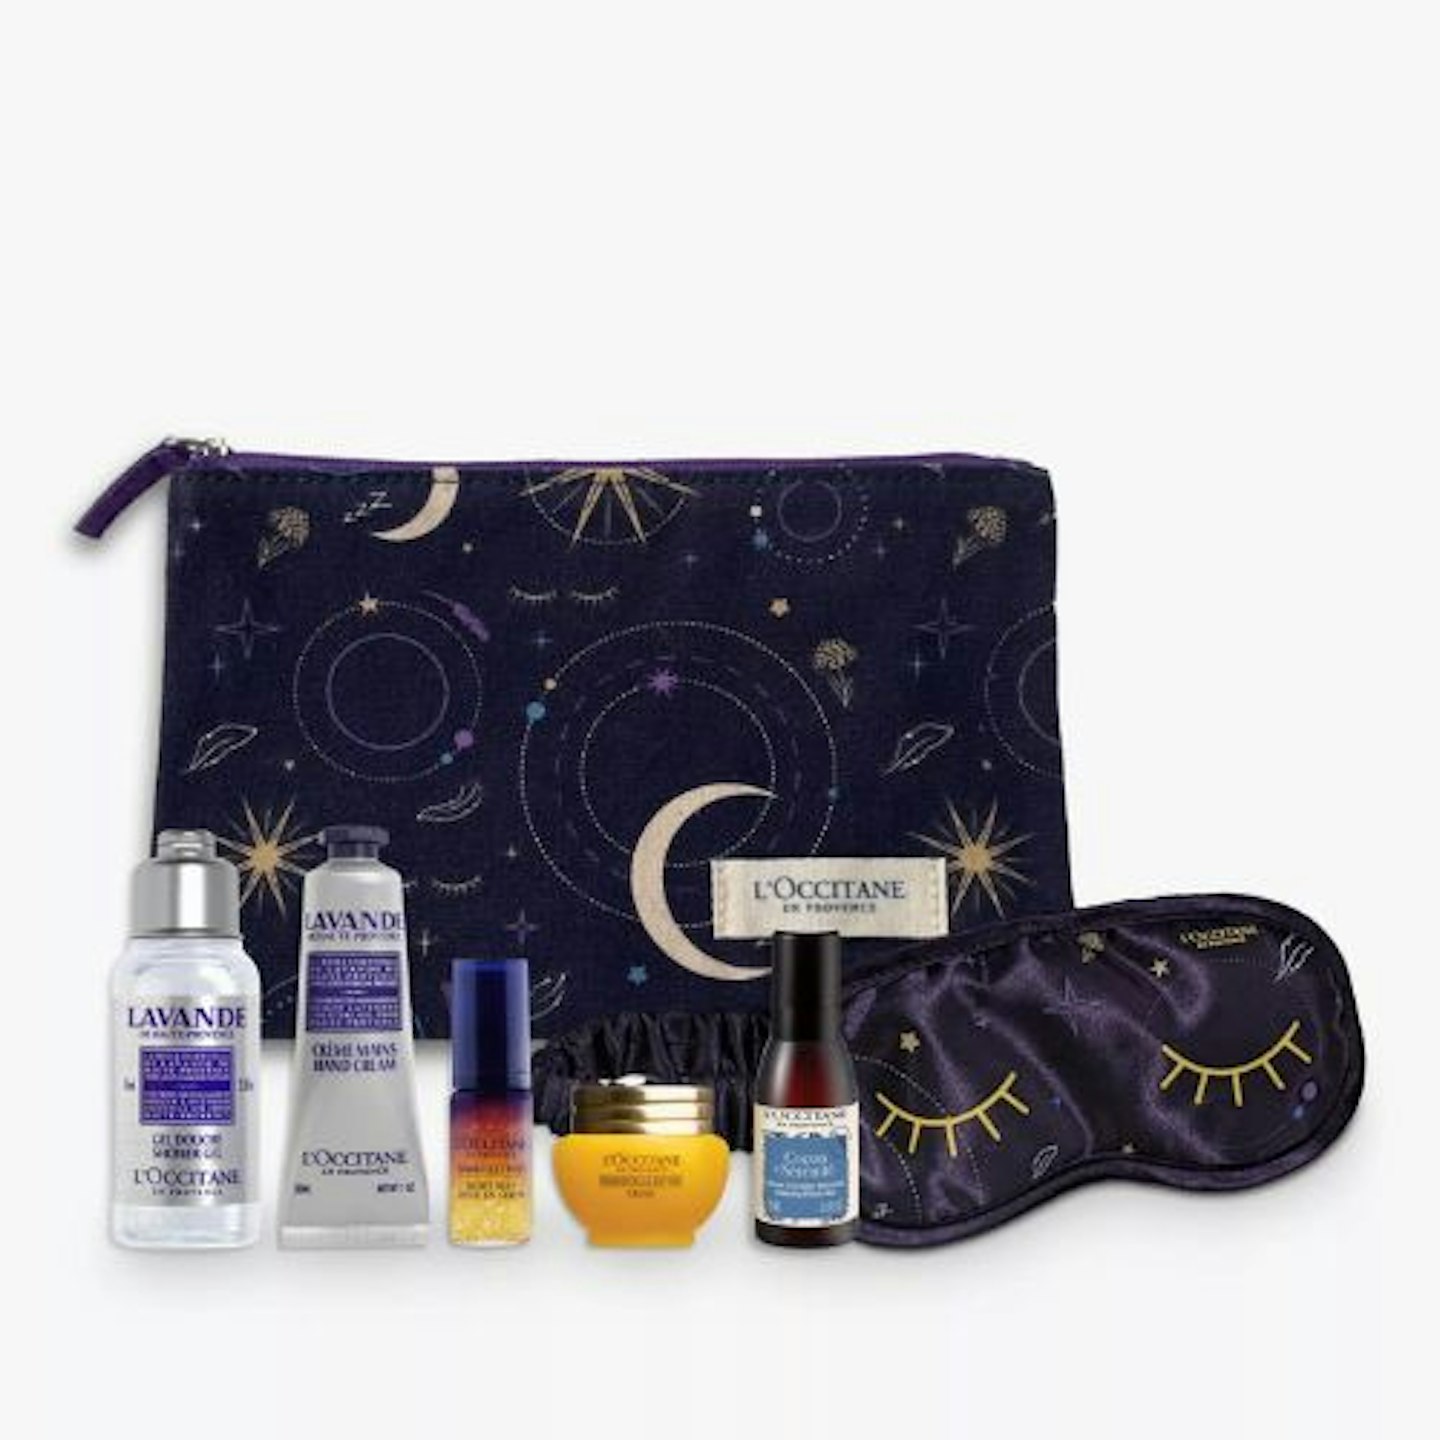 L'OCCITANE, Beauty Sleep Collection Bodycare Gift Set